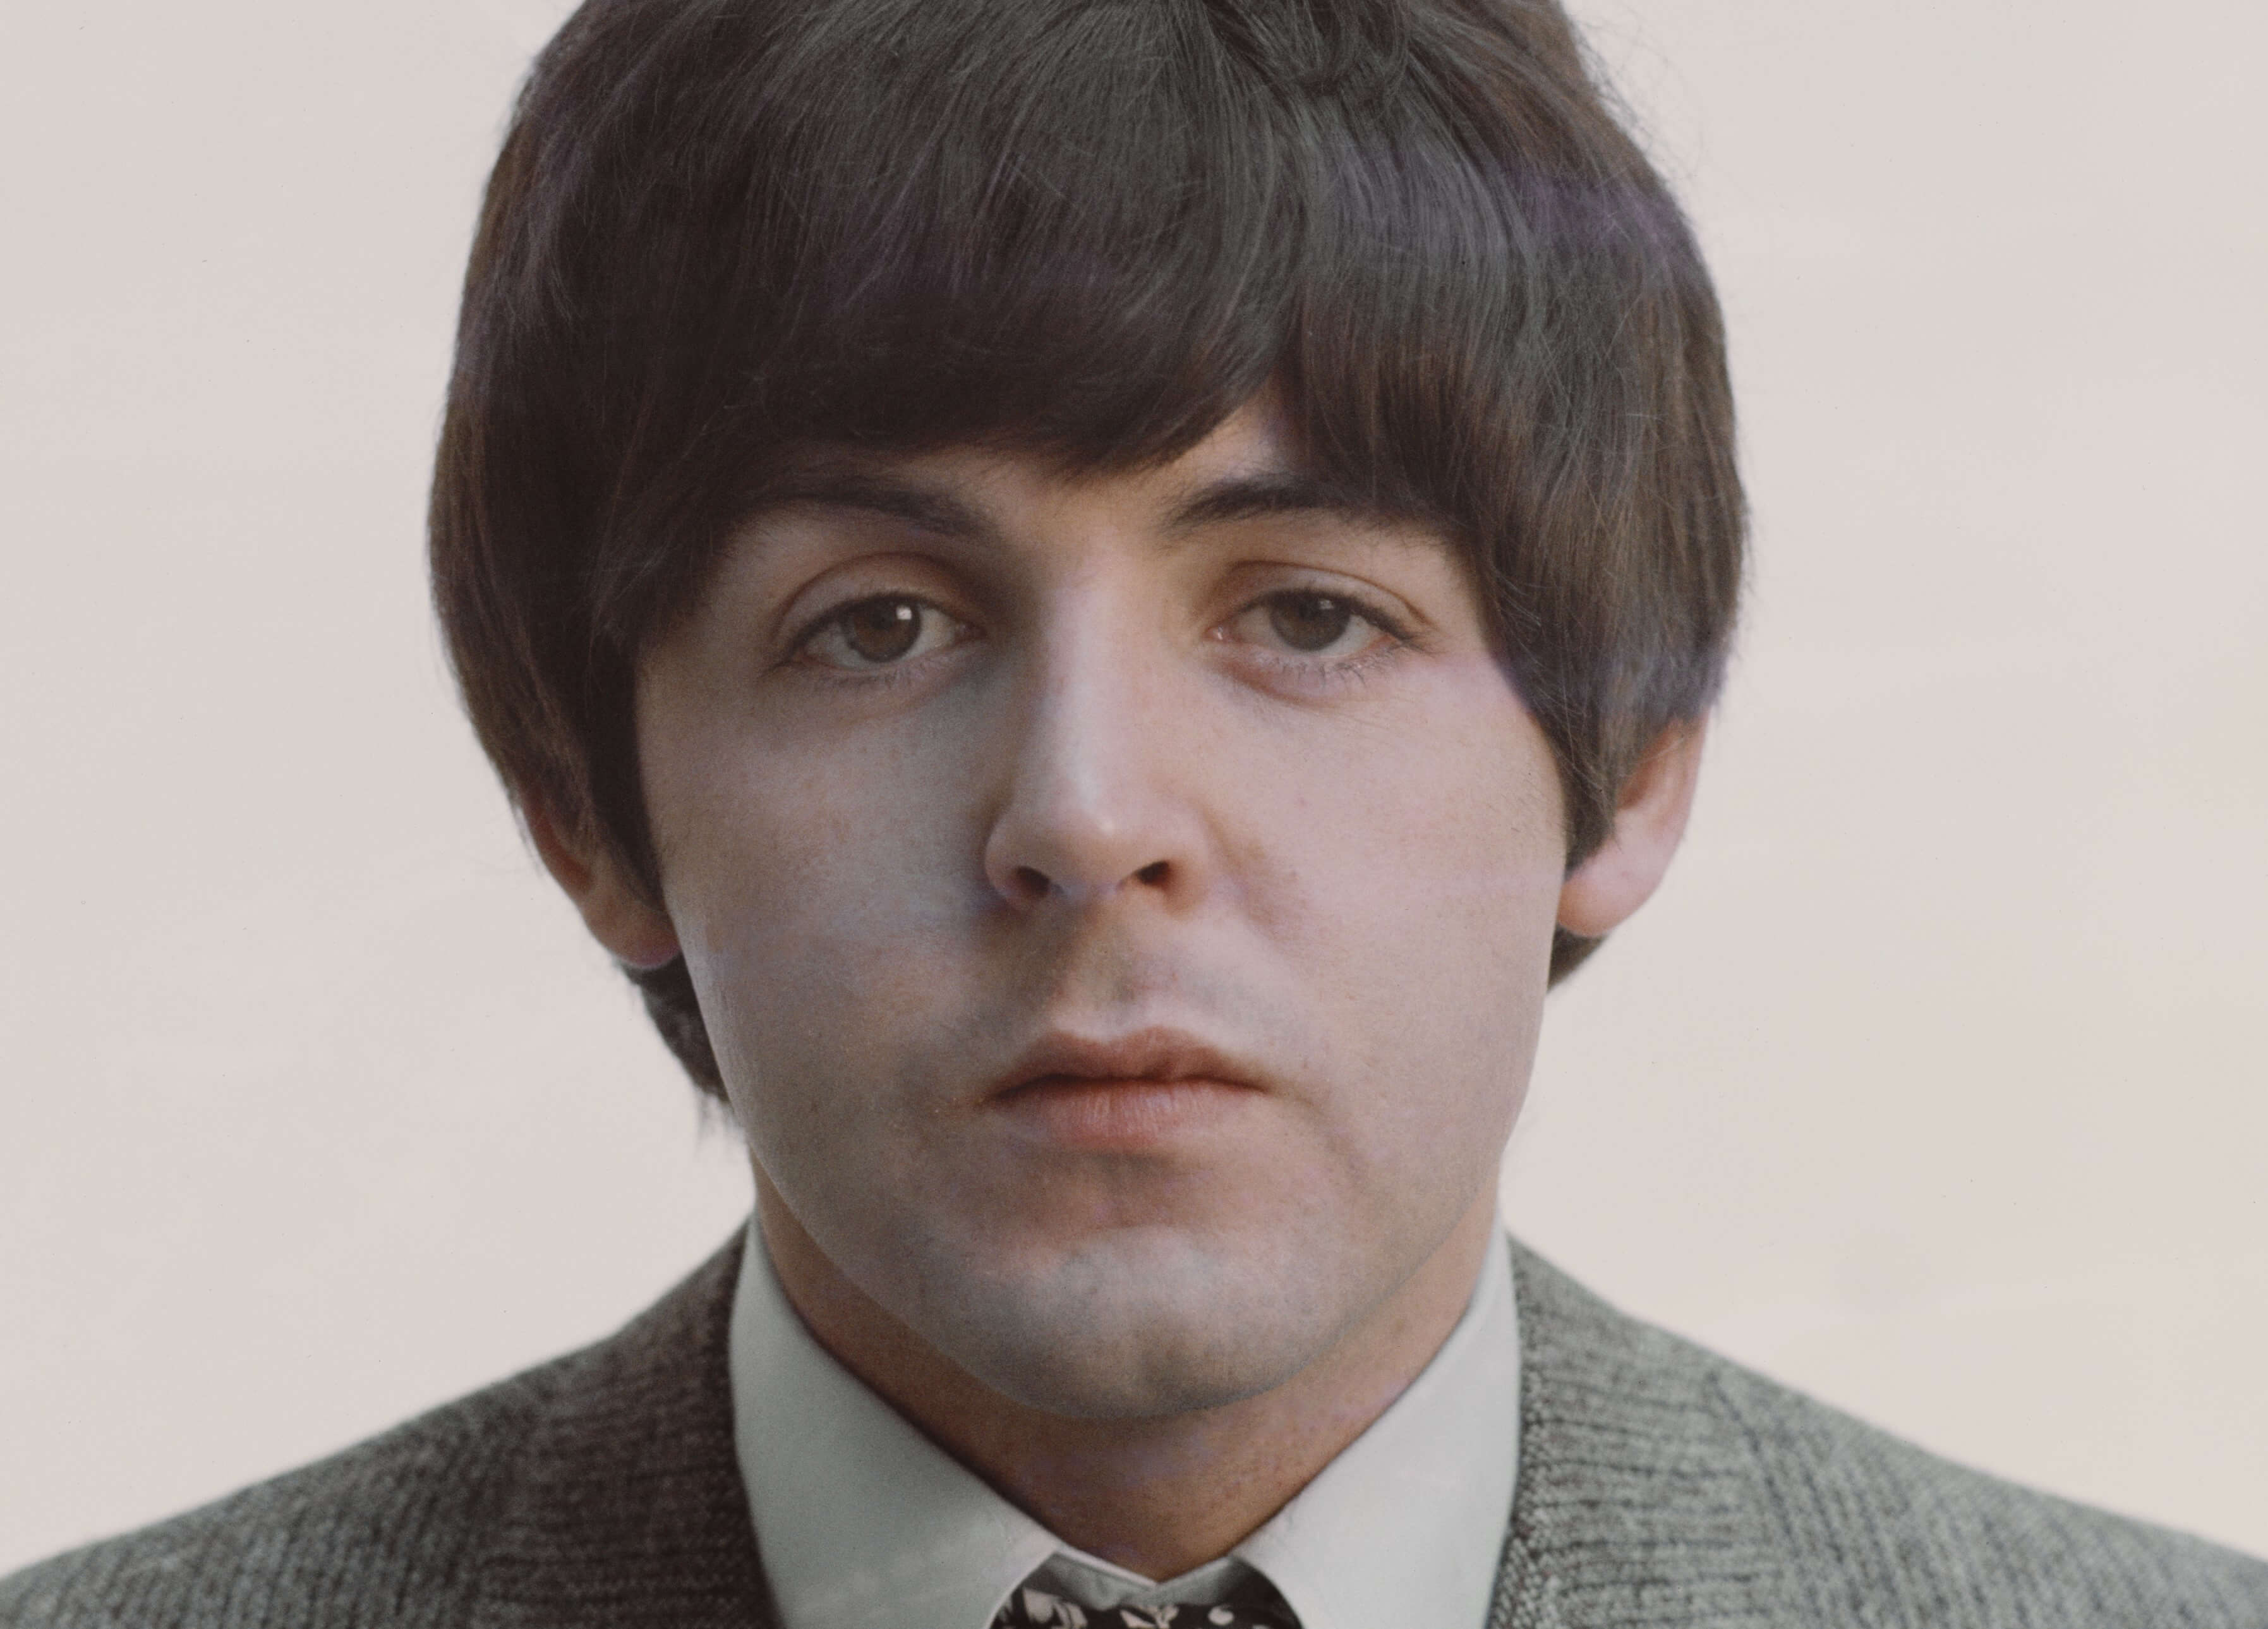 Paul McCartney, writer of Mary Hopkin's "Goodbye," wearing a suit